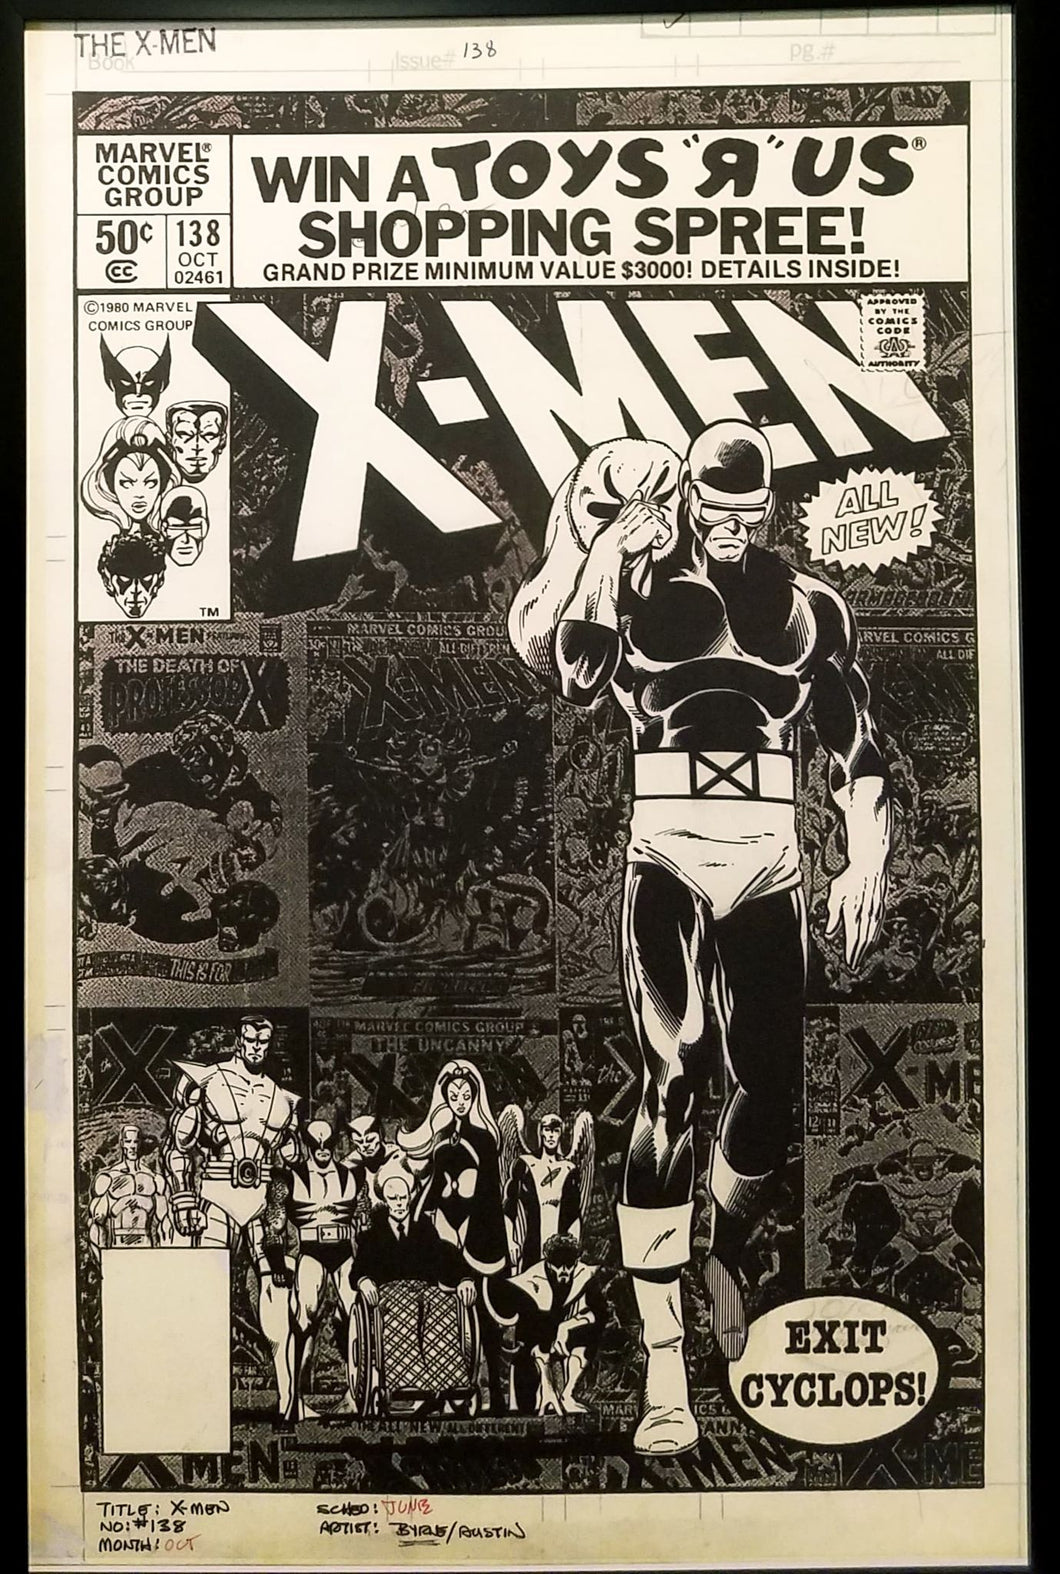 Uncanny X-Men #138 by John Byrne 11x17 FRAMED Original Art Poster Marvel Comics